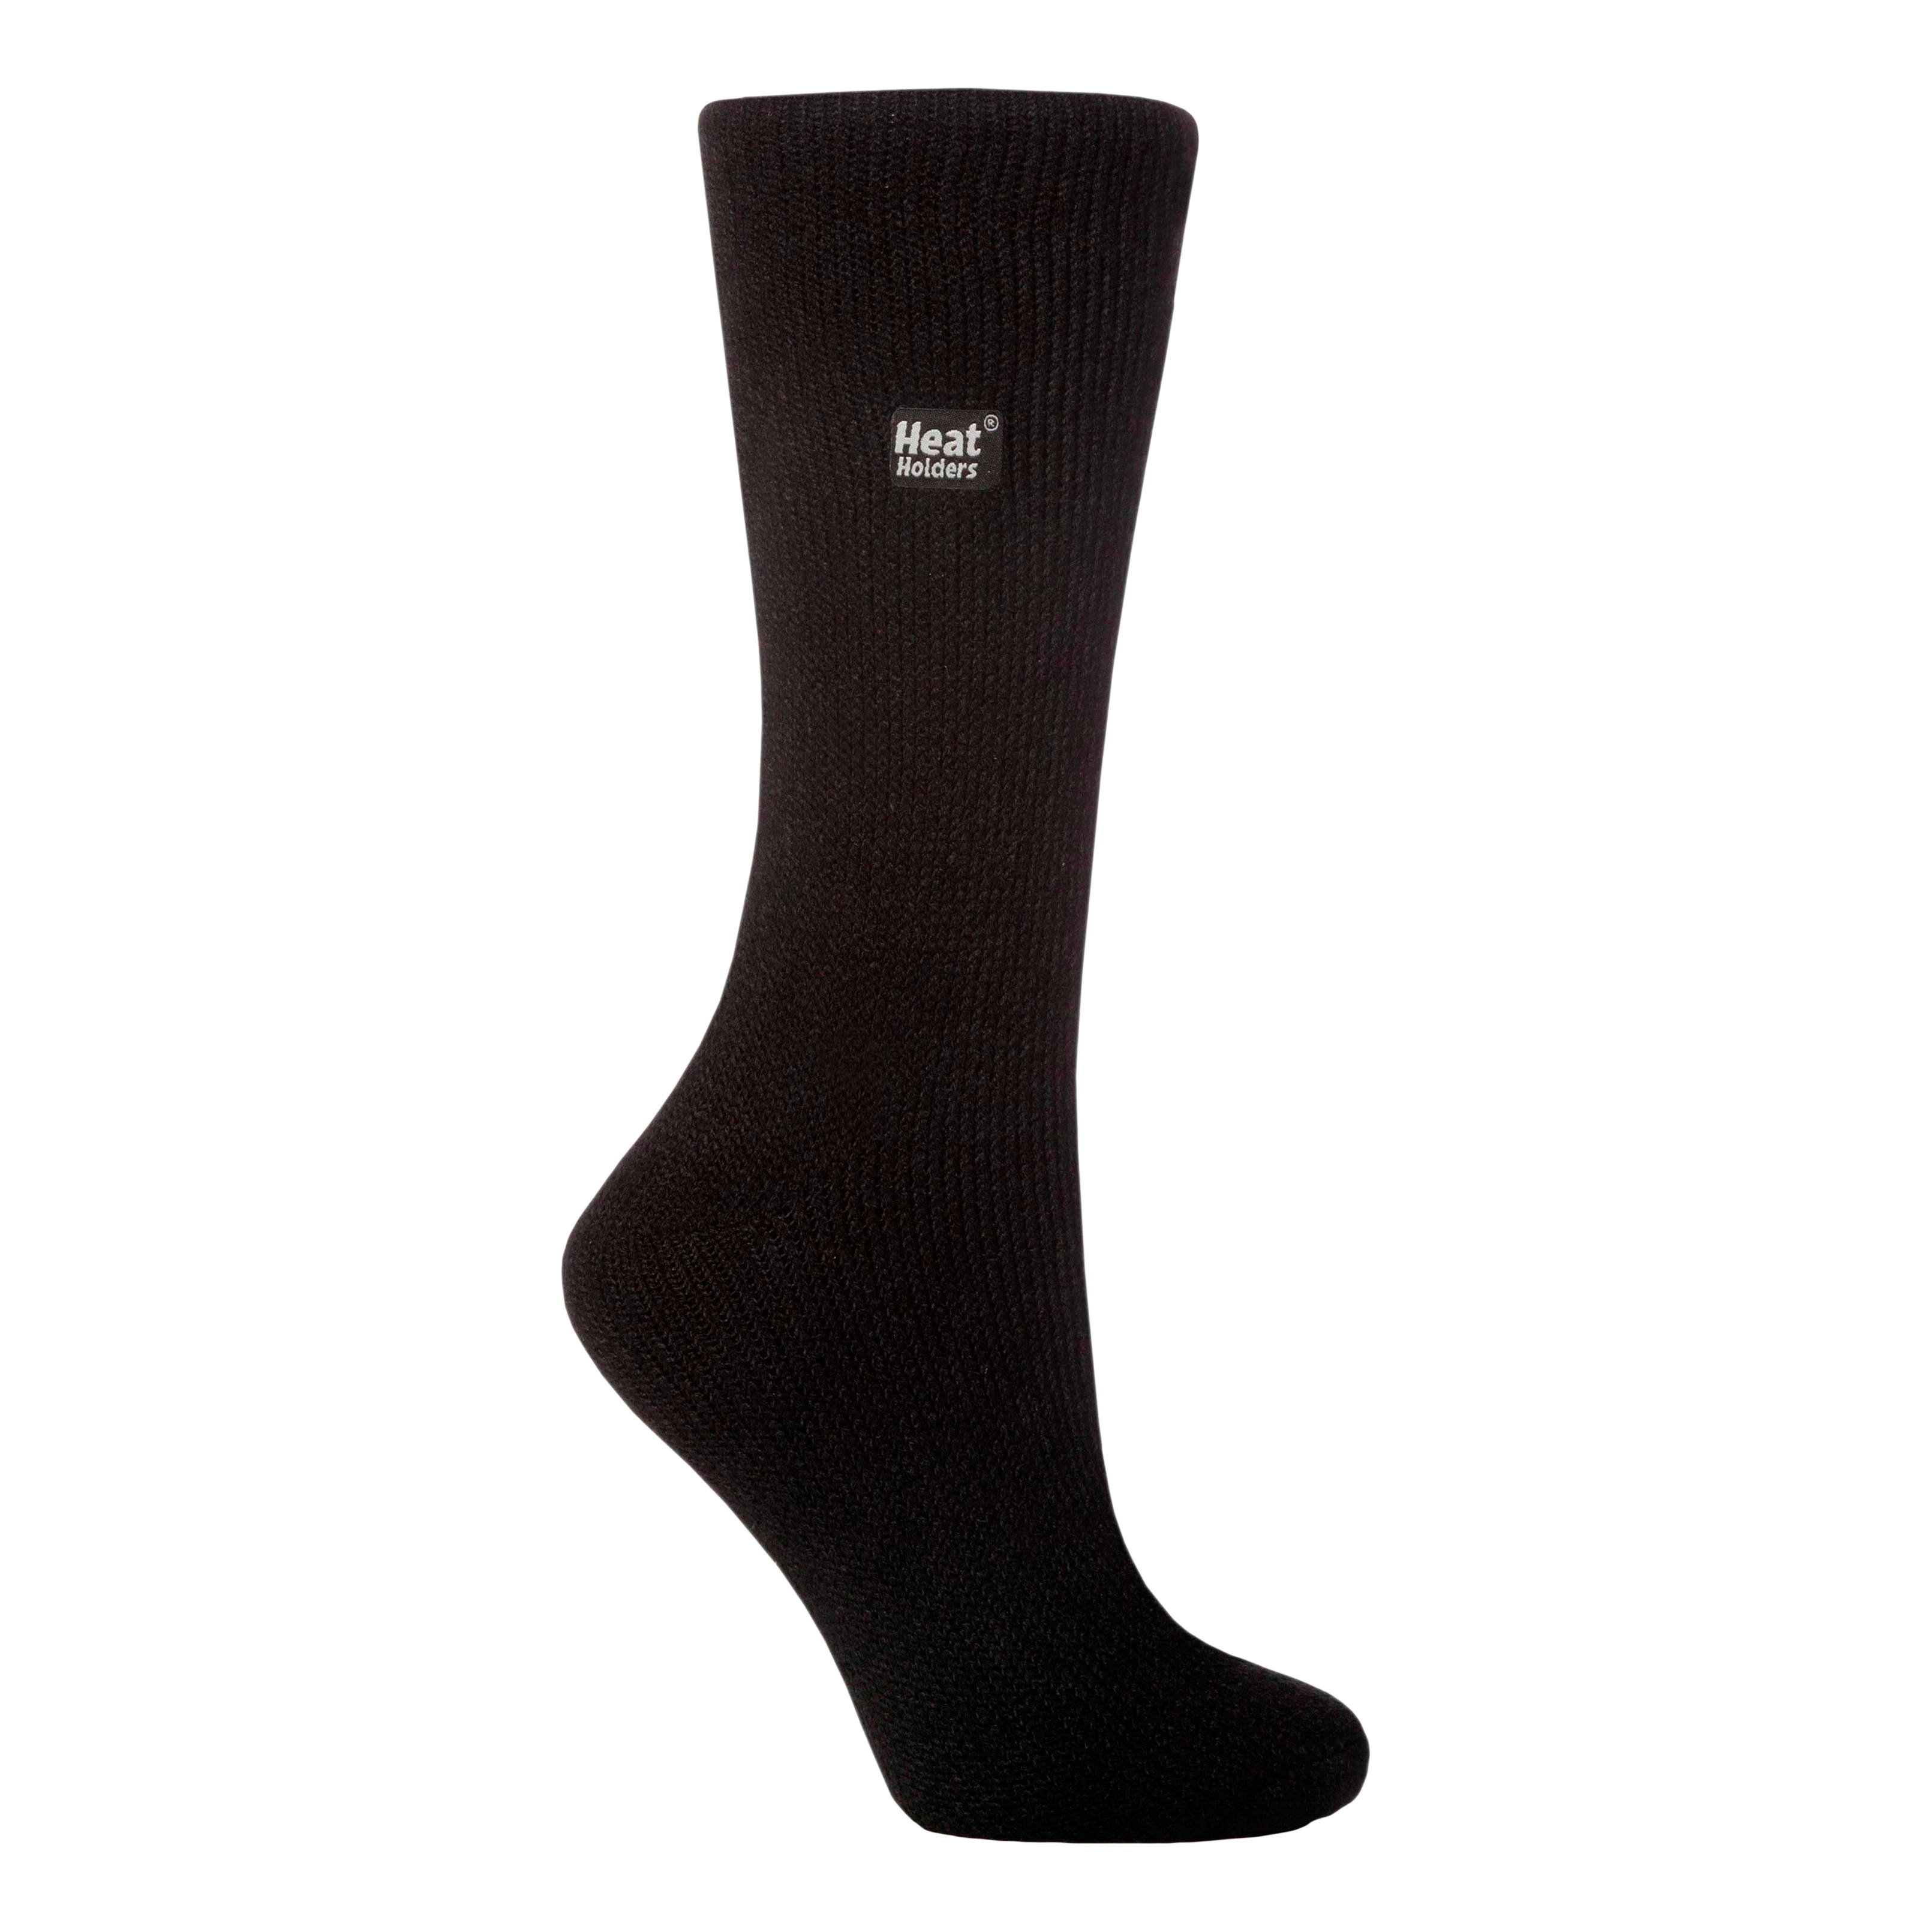 Heat Holders® Women’s Original Crew Socks - Black